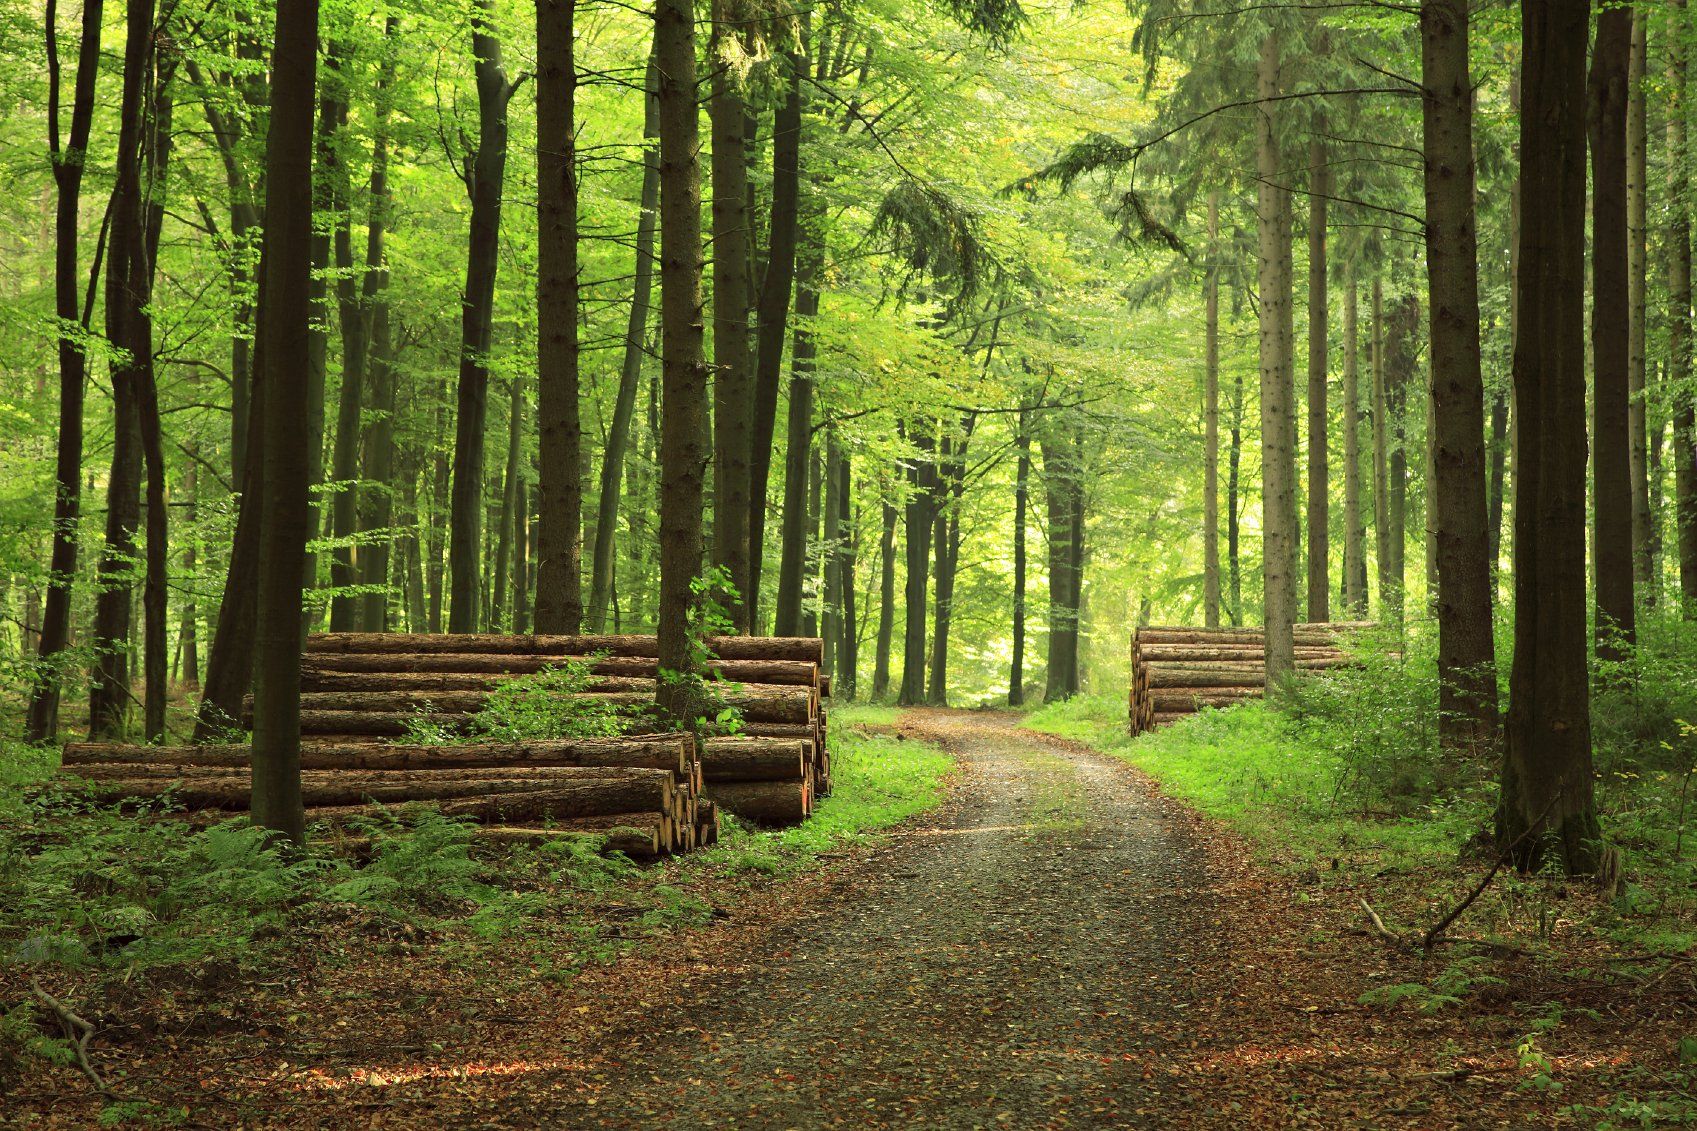 A dirt pathway through a lush green forest